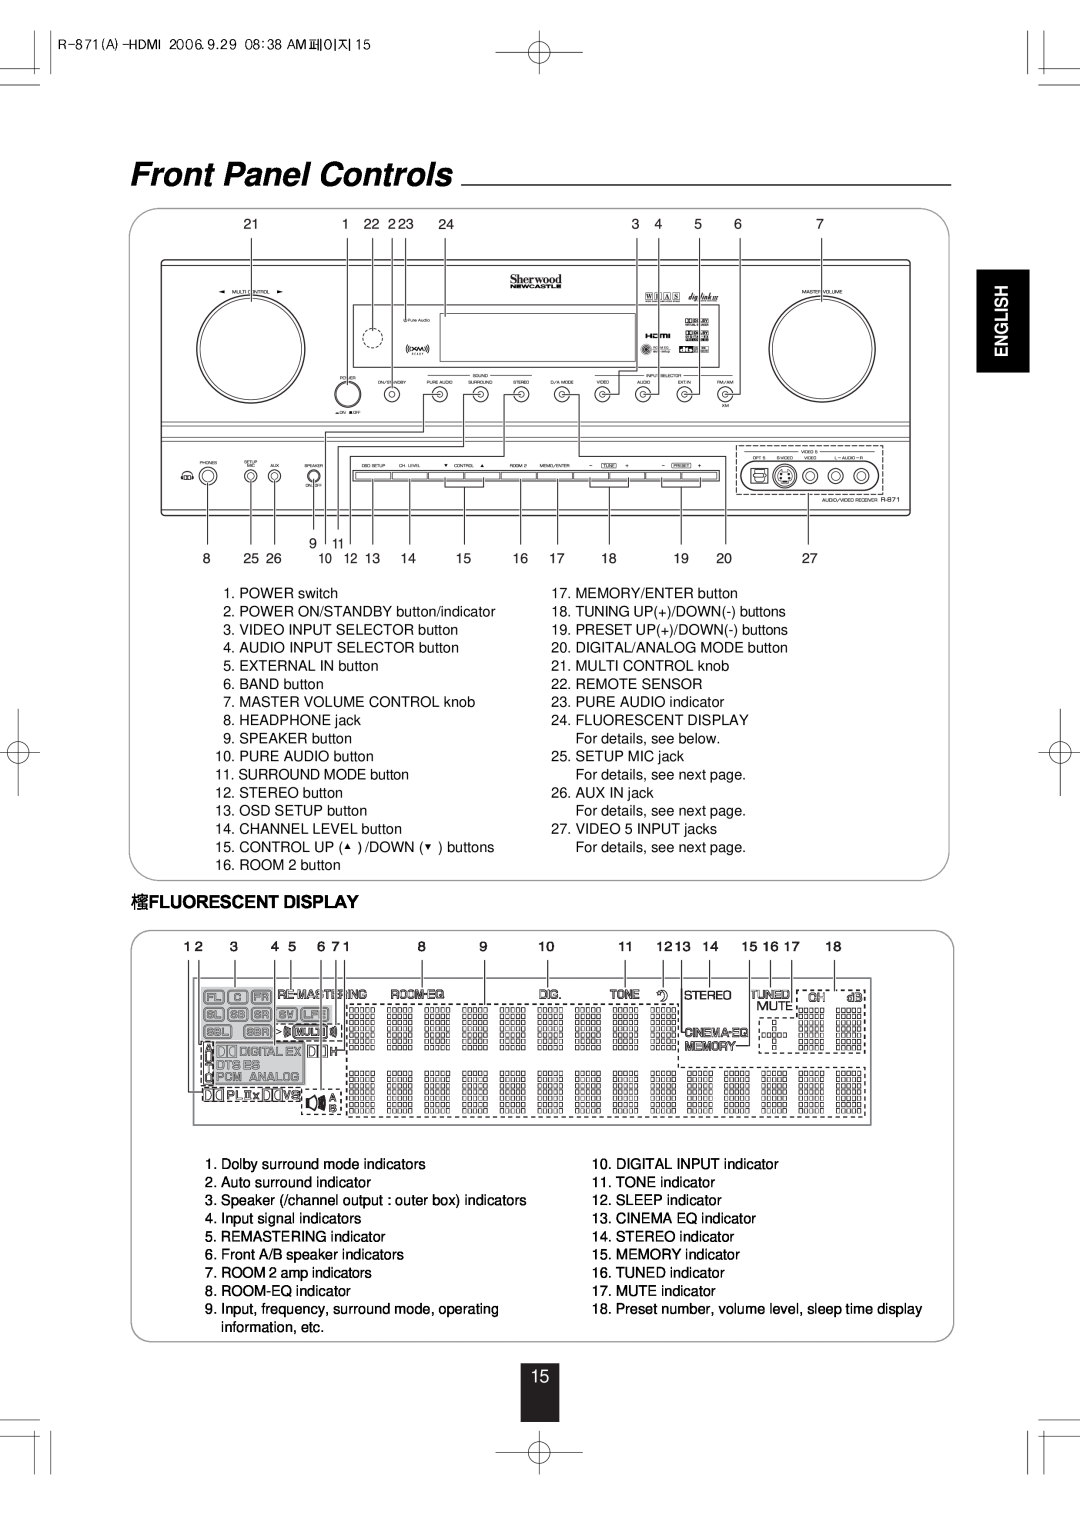 Sherwood R-871 manual Front Panel Controls, Fluorescent Display, English 